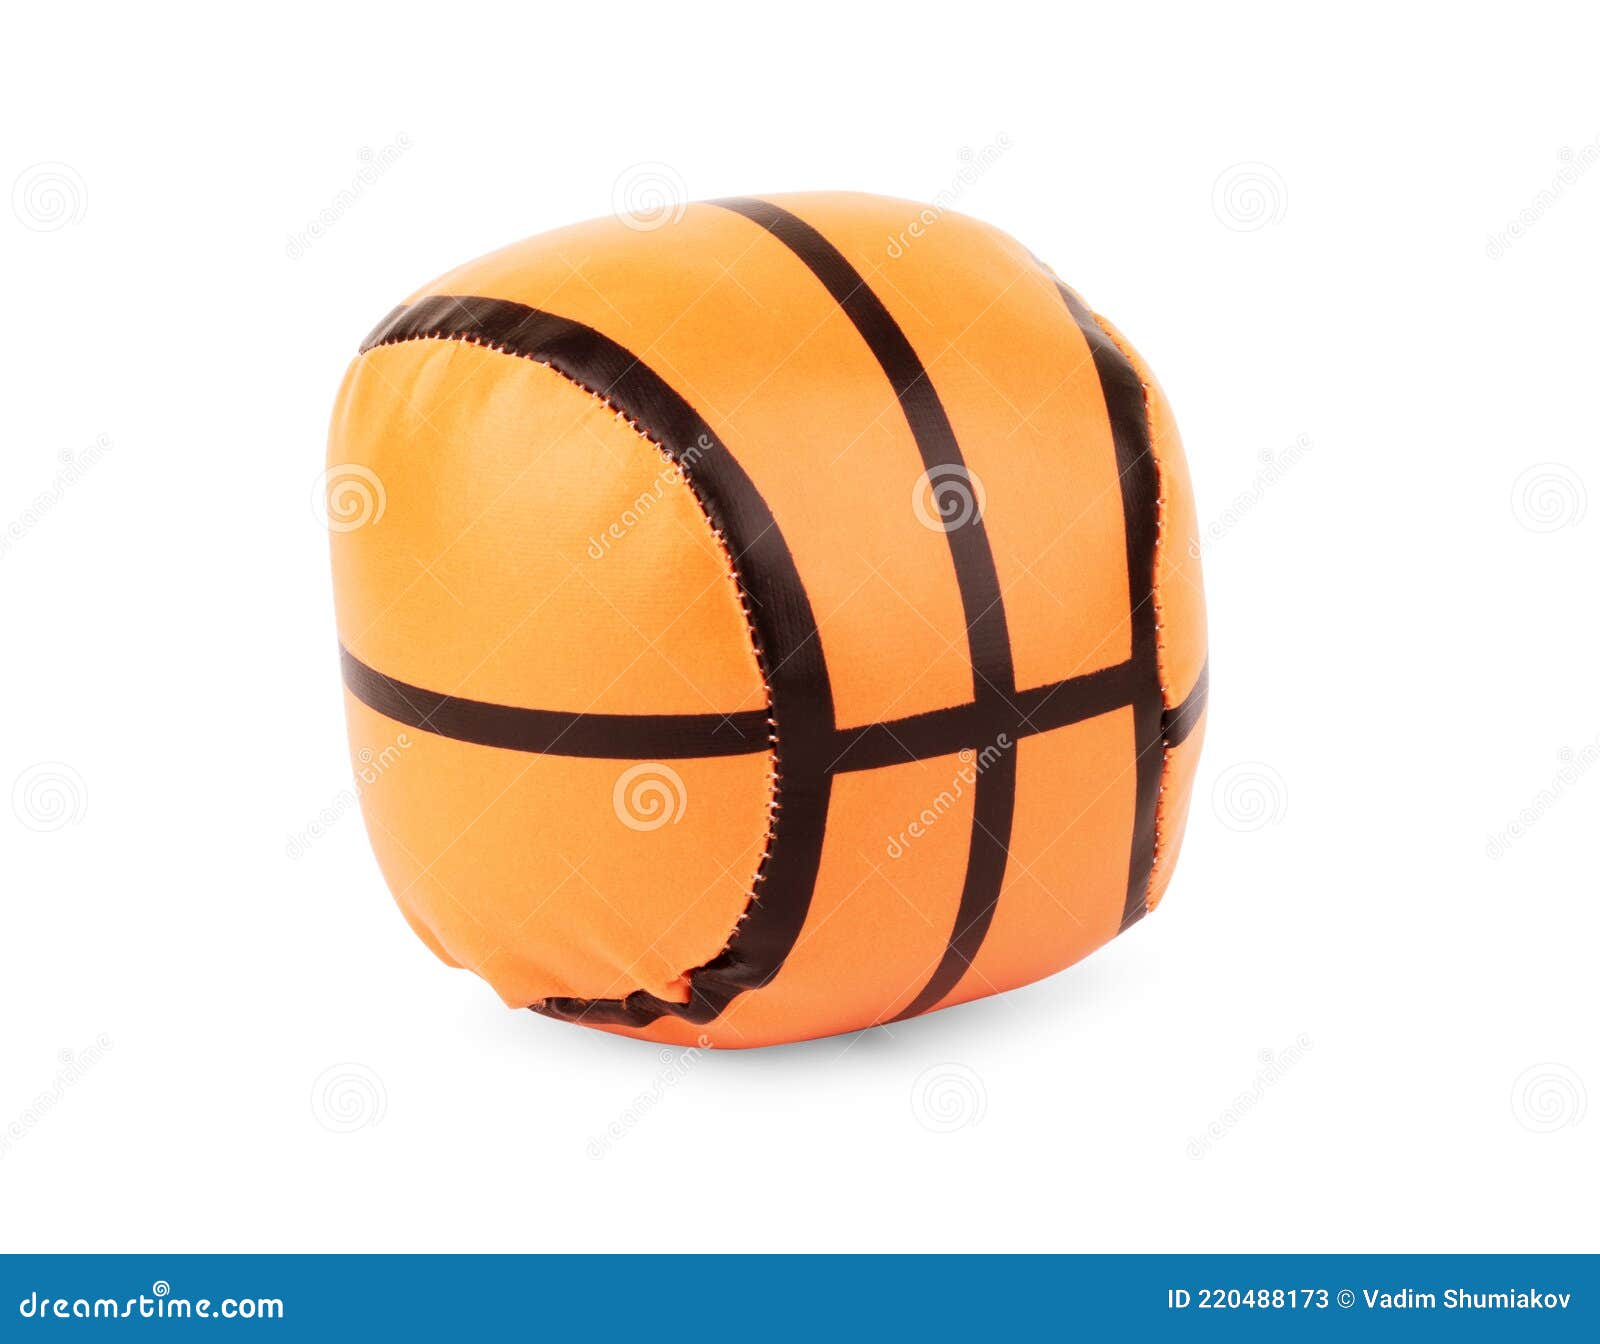 basketball ball over white background. orange ball, sports concept